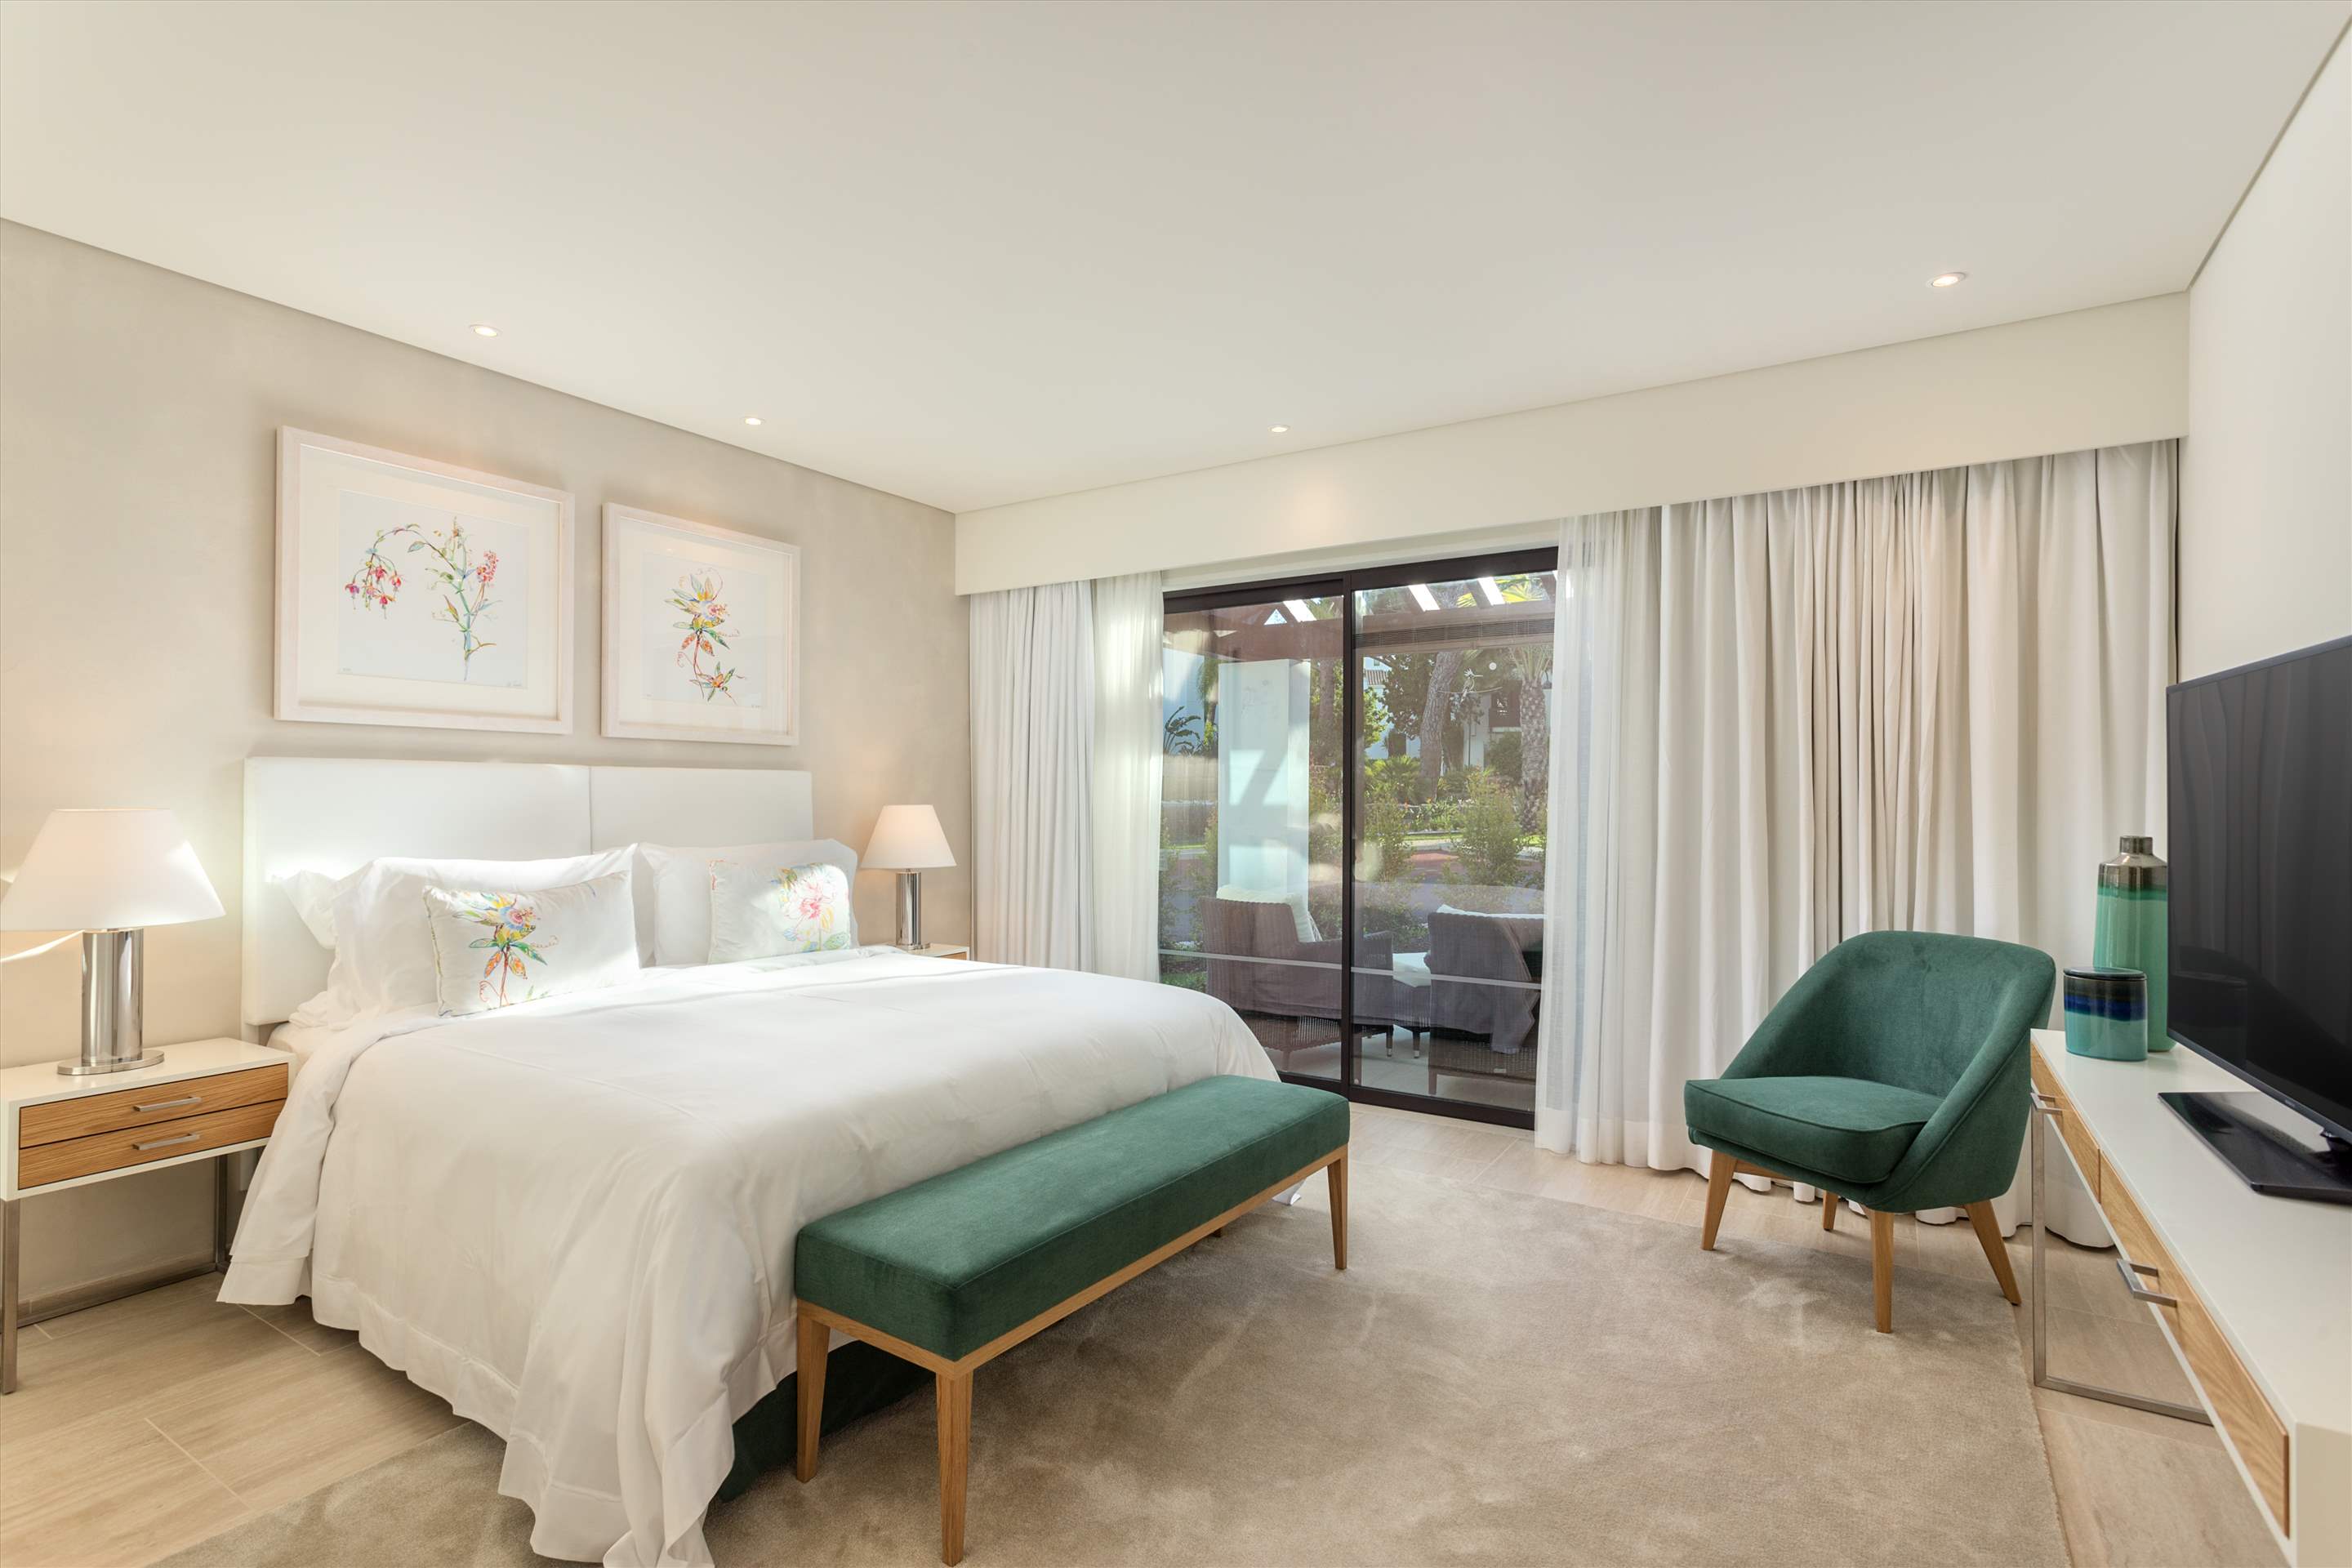 Pine Cliffs Gardens, Three Bedroom Suite,Garden Access, S/C Basis, 3 bedroom apartment in Pine Cliffs Resort, Algarve Photo #20